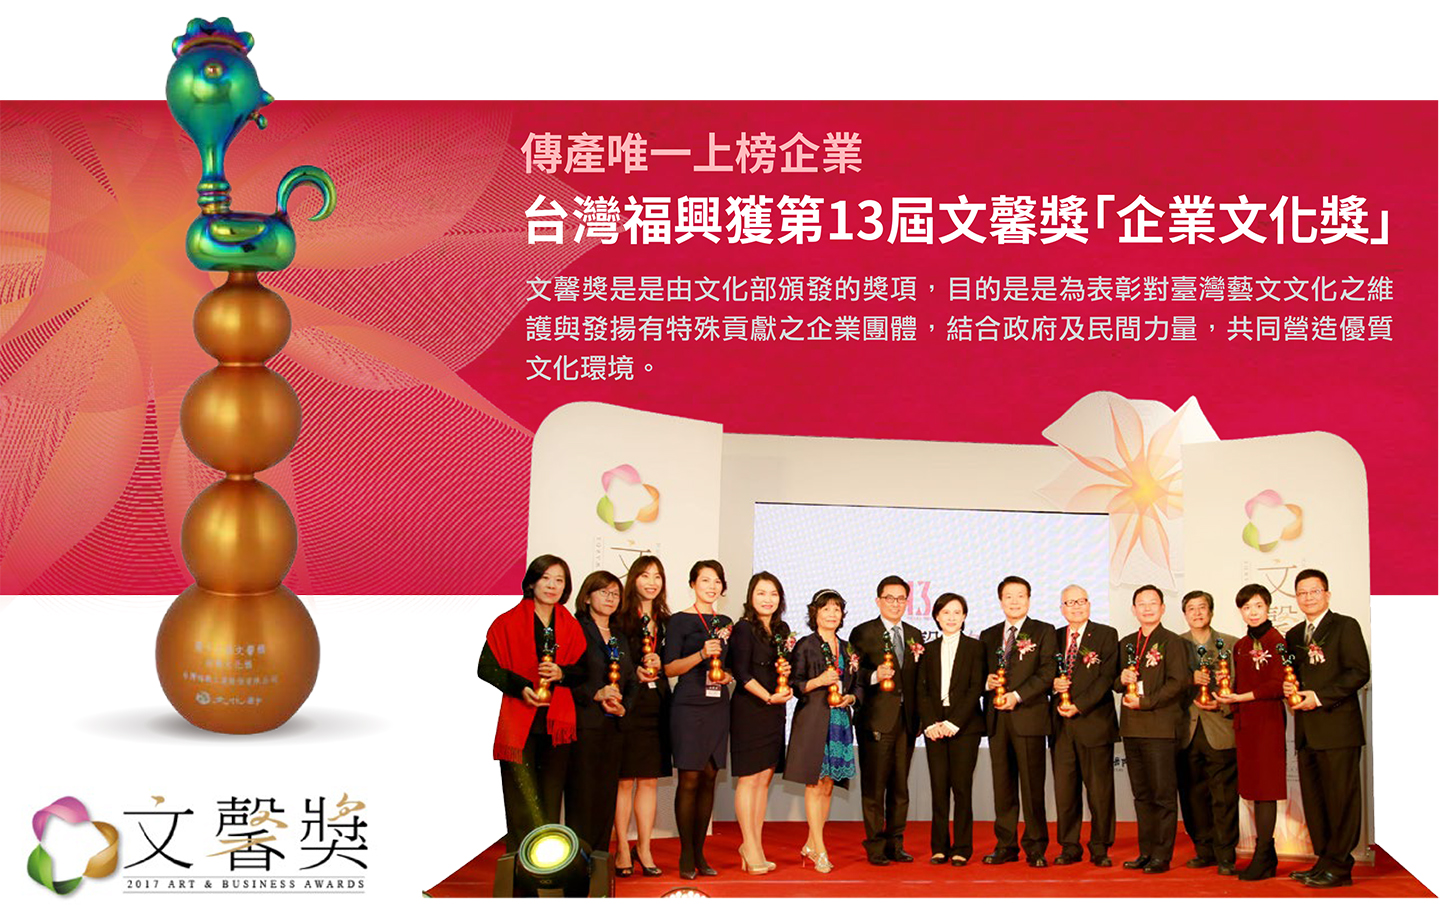 tfh newsletter_Business Culture Award_CH.jpg (996 KB)